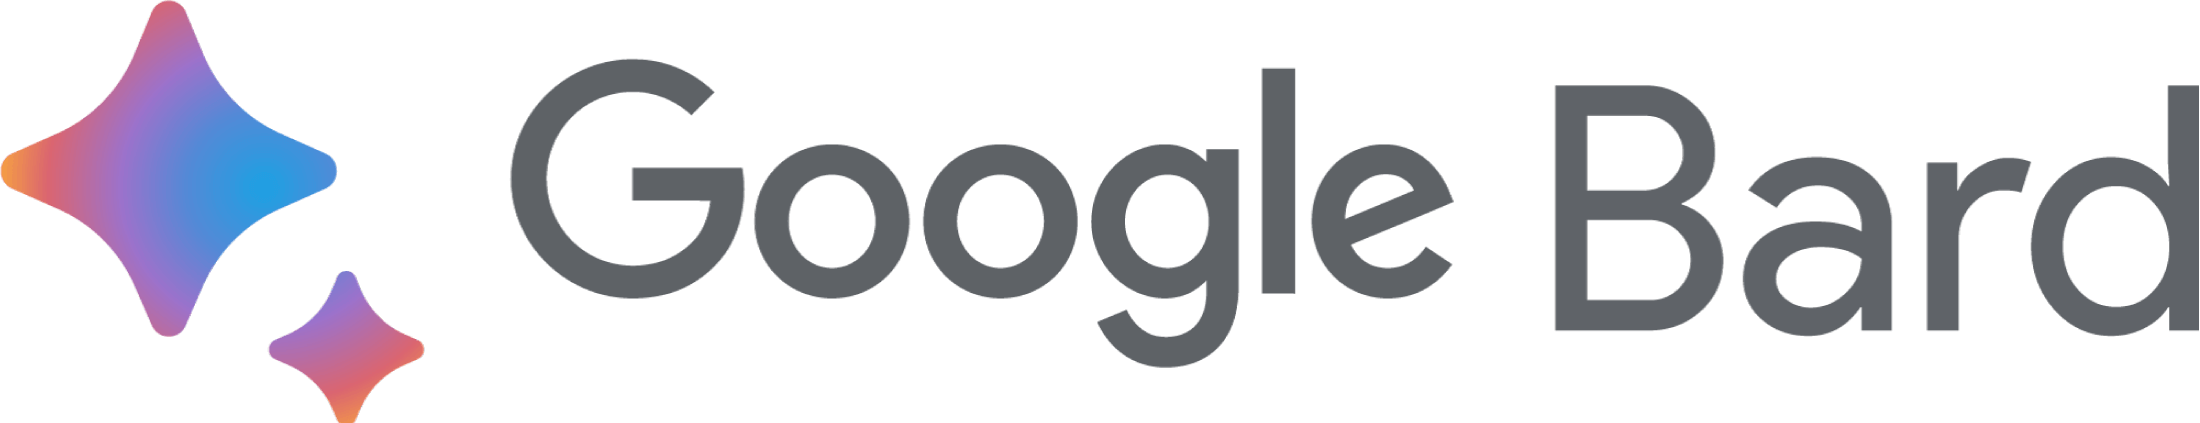 Google Bard Logo PNG title=